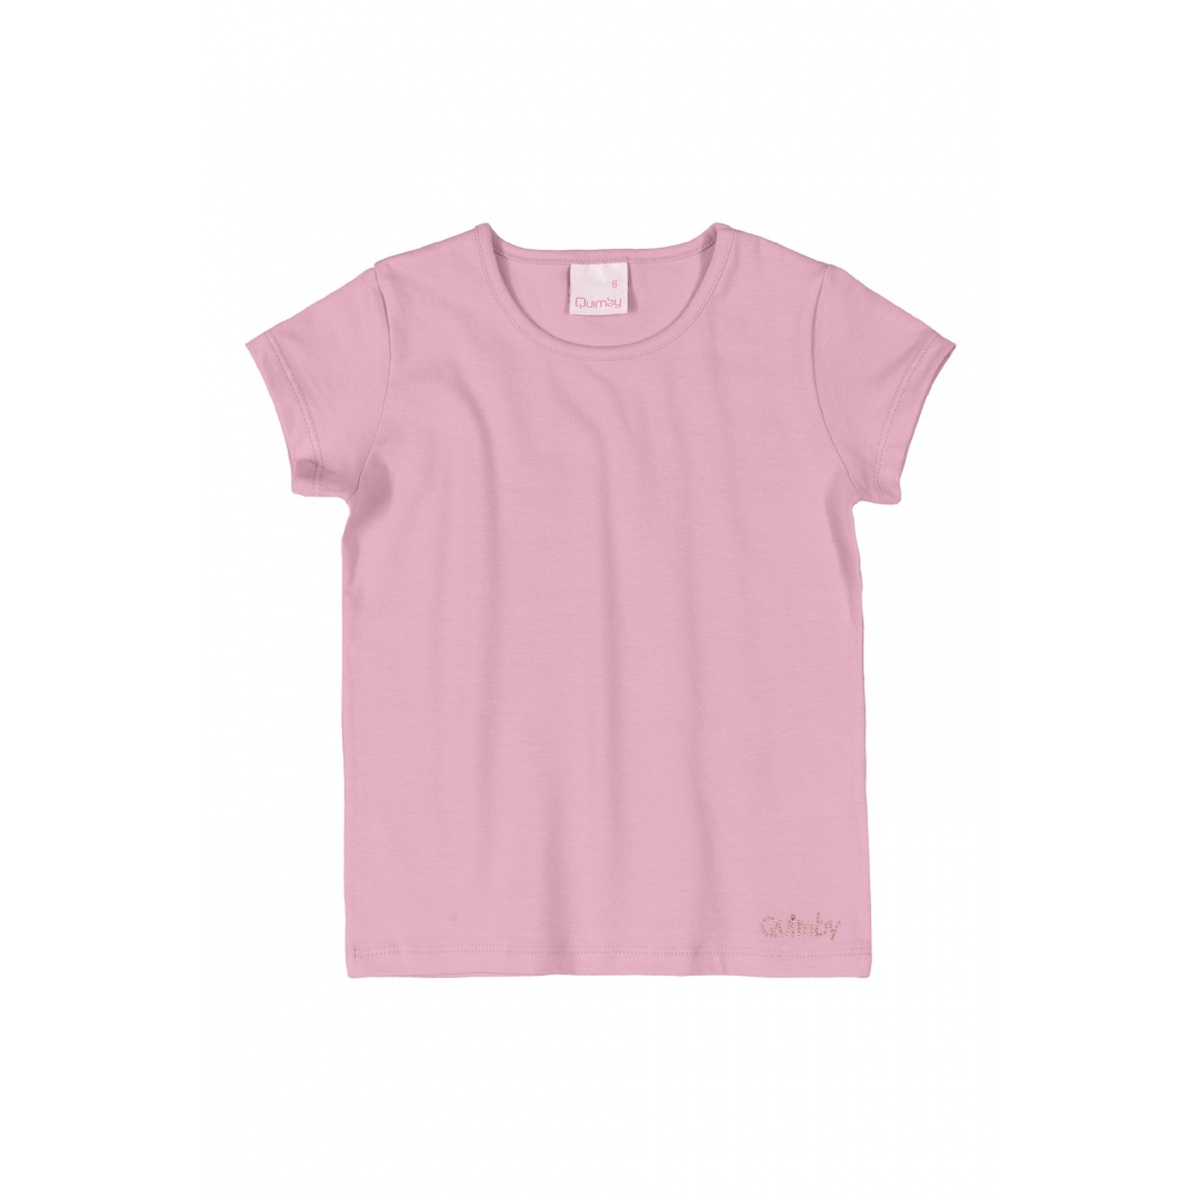 Camiseta Menina Quimby em Cotton - Rosa